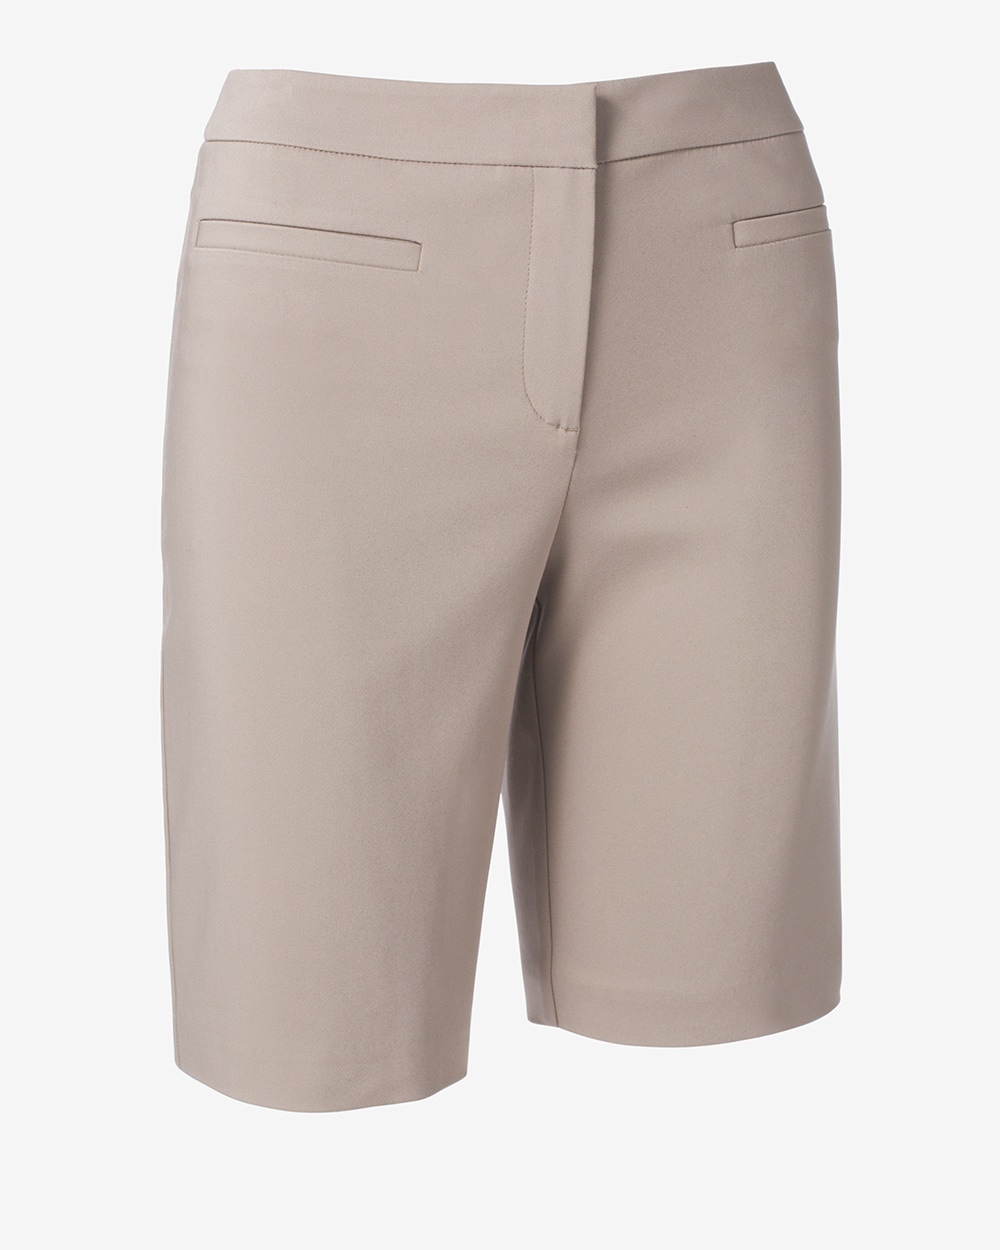 Darcy Shorts- 10 Inch Inseam